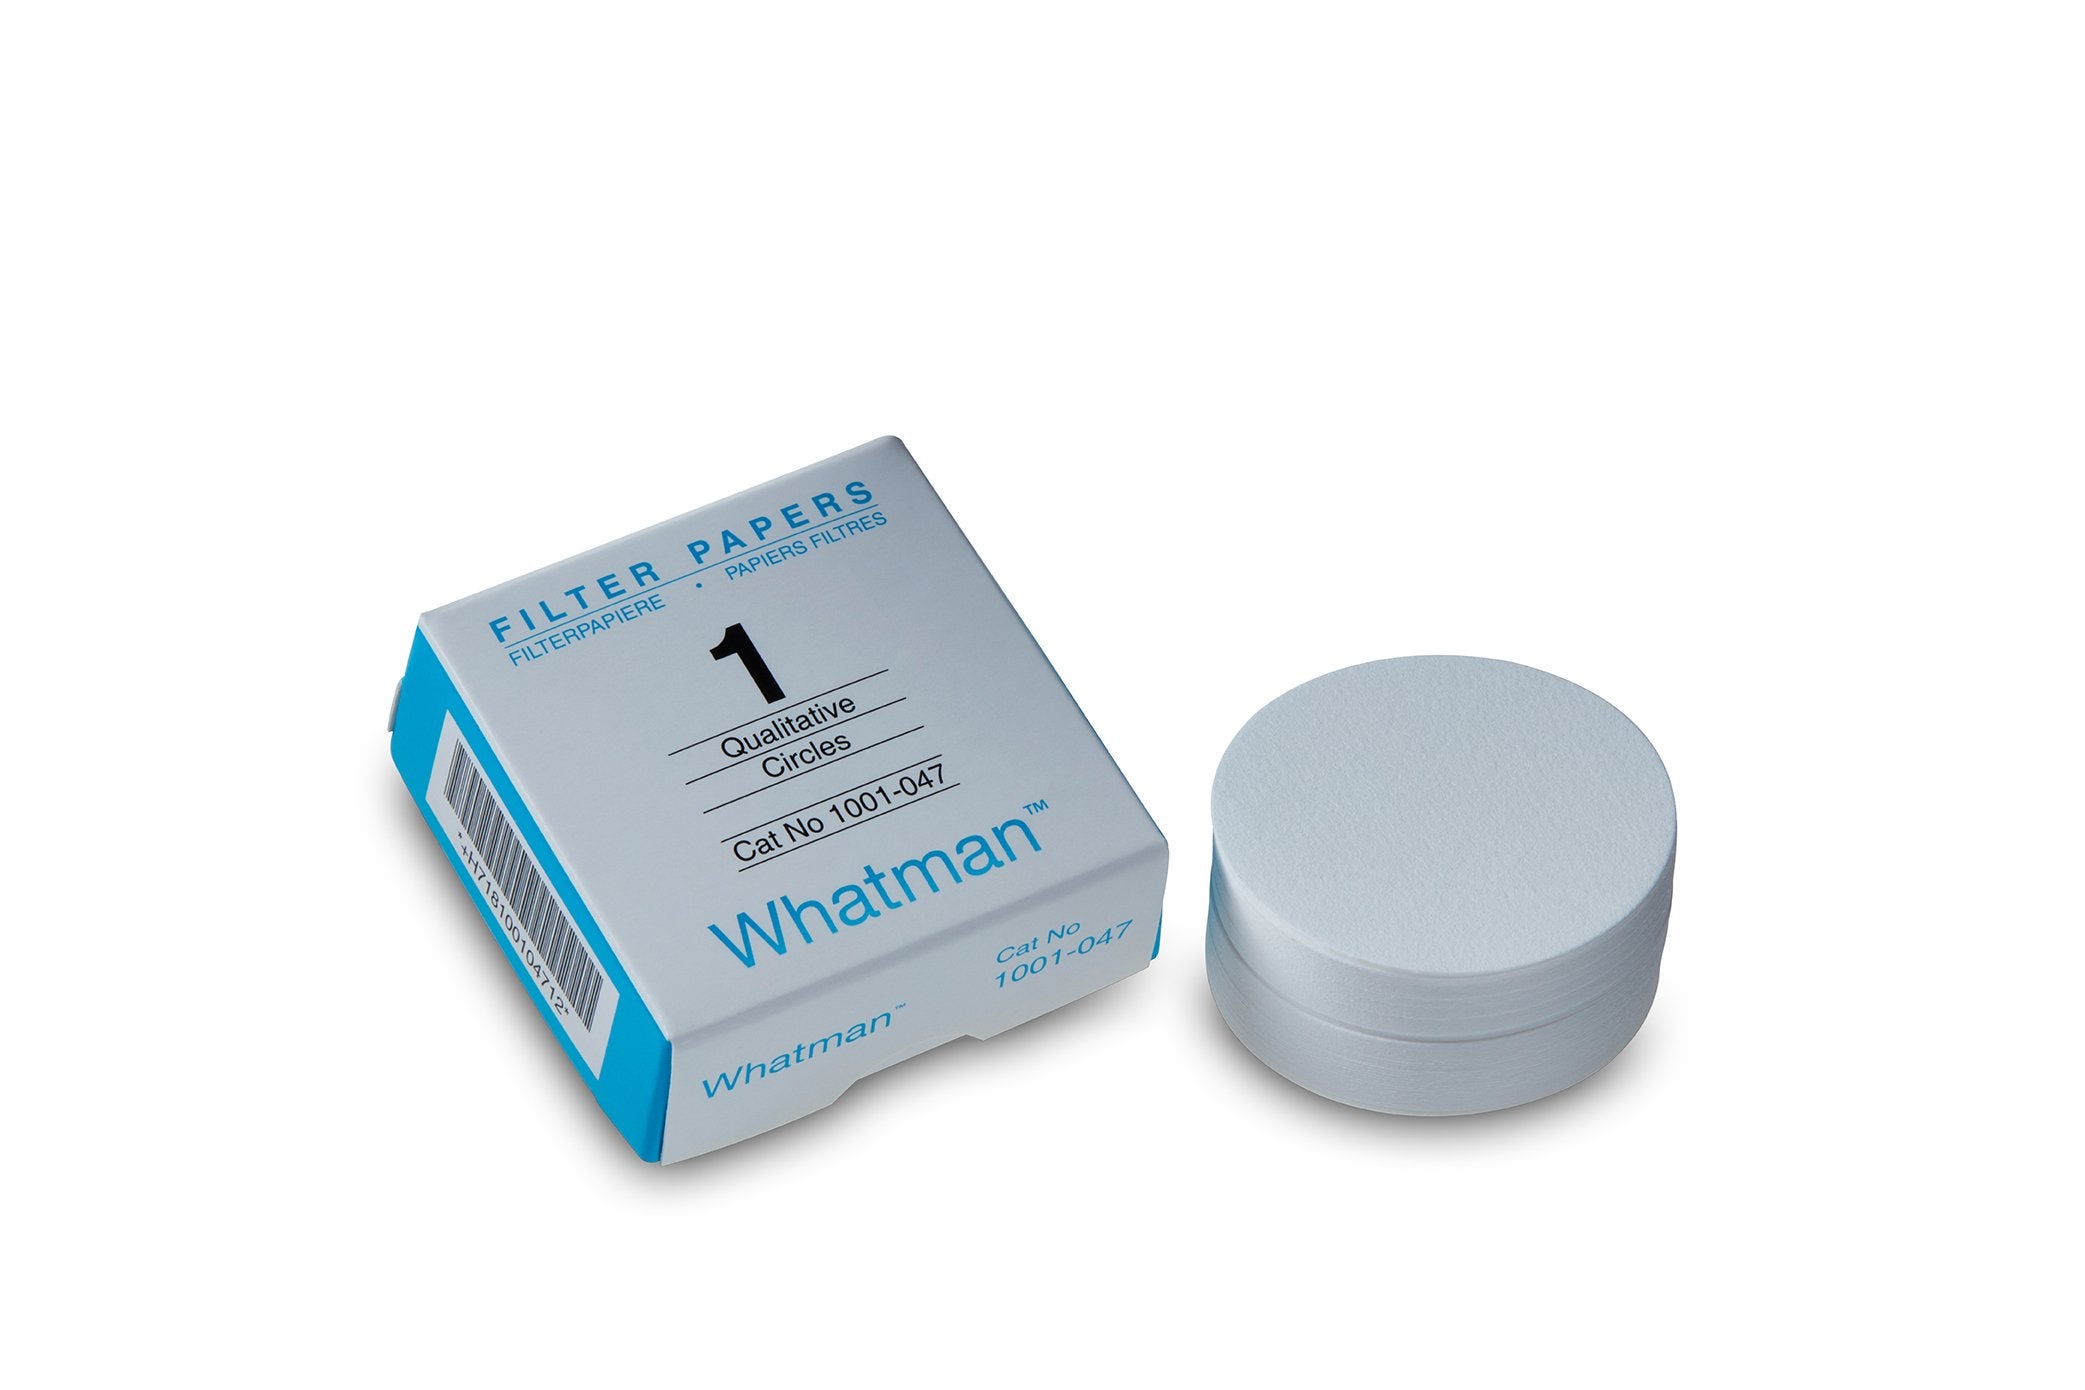 Whatman 3001-640 Cellulose Chromatography Paper, Grade 1 Chr Roll, 3.0cm x 100m, 1/pk